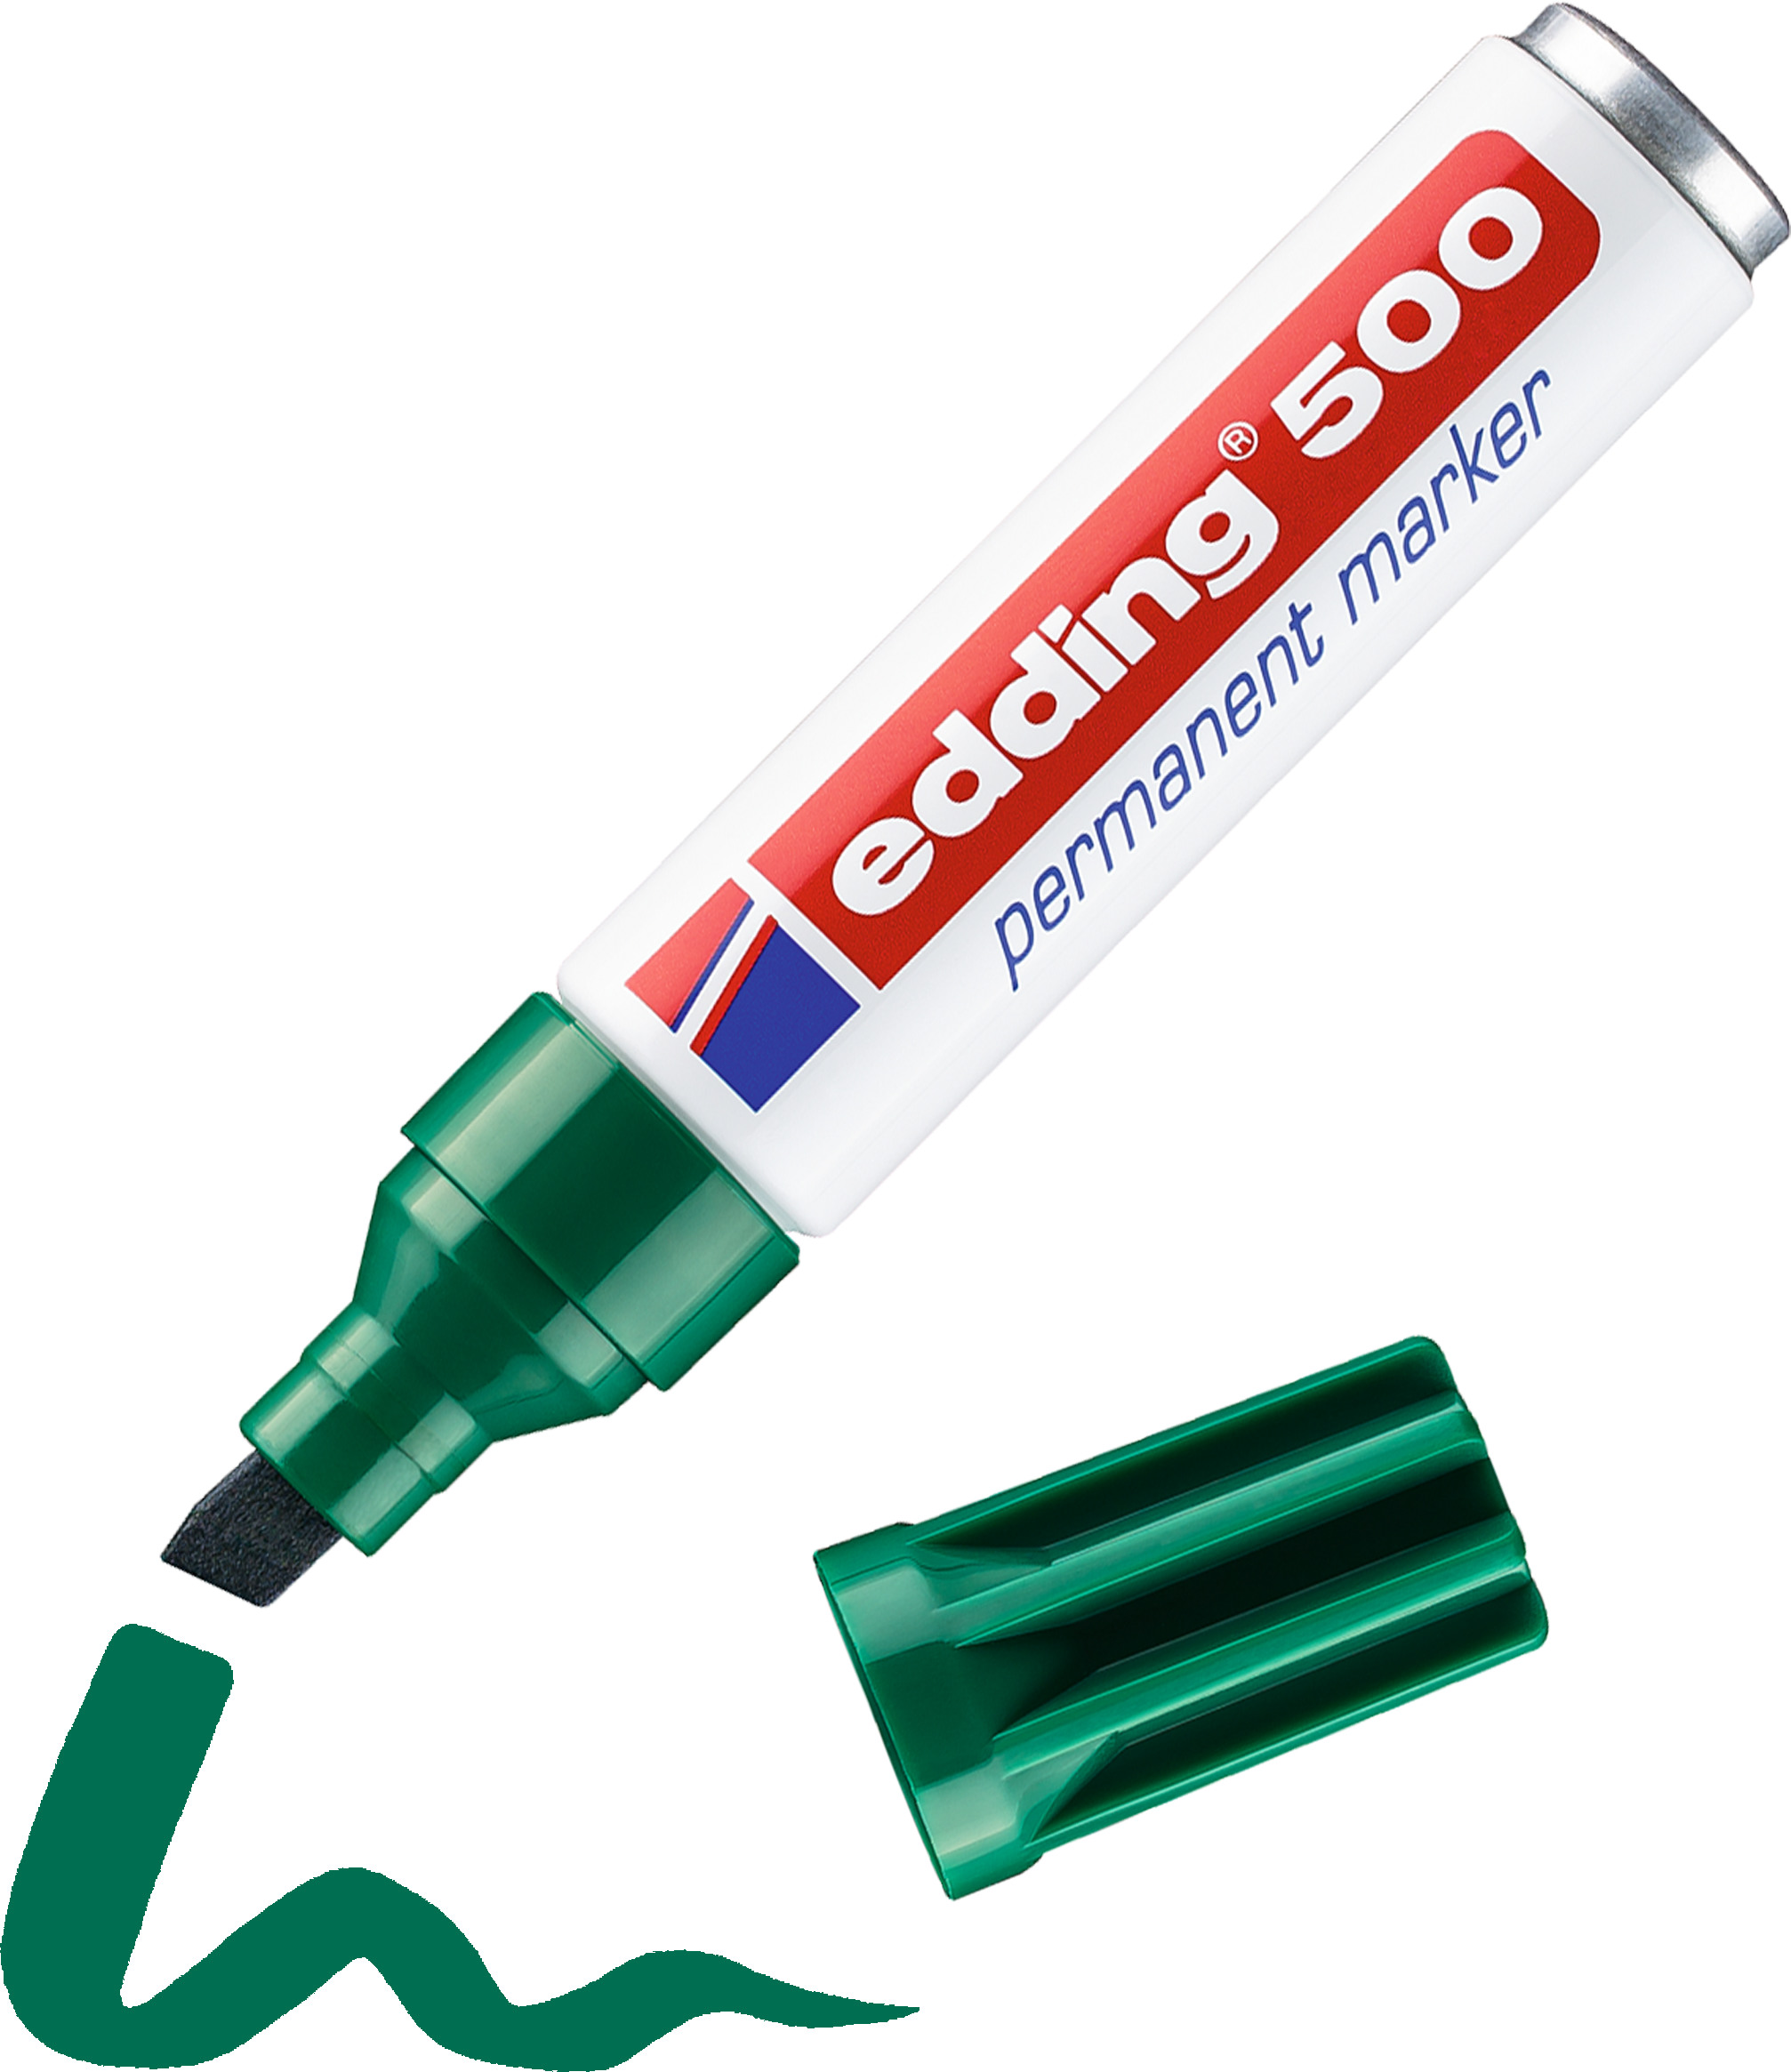 EDDING Marqueur permanent 500 2-7mm 500-4 vert